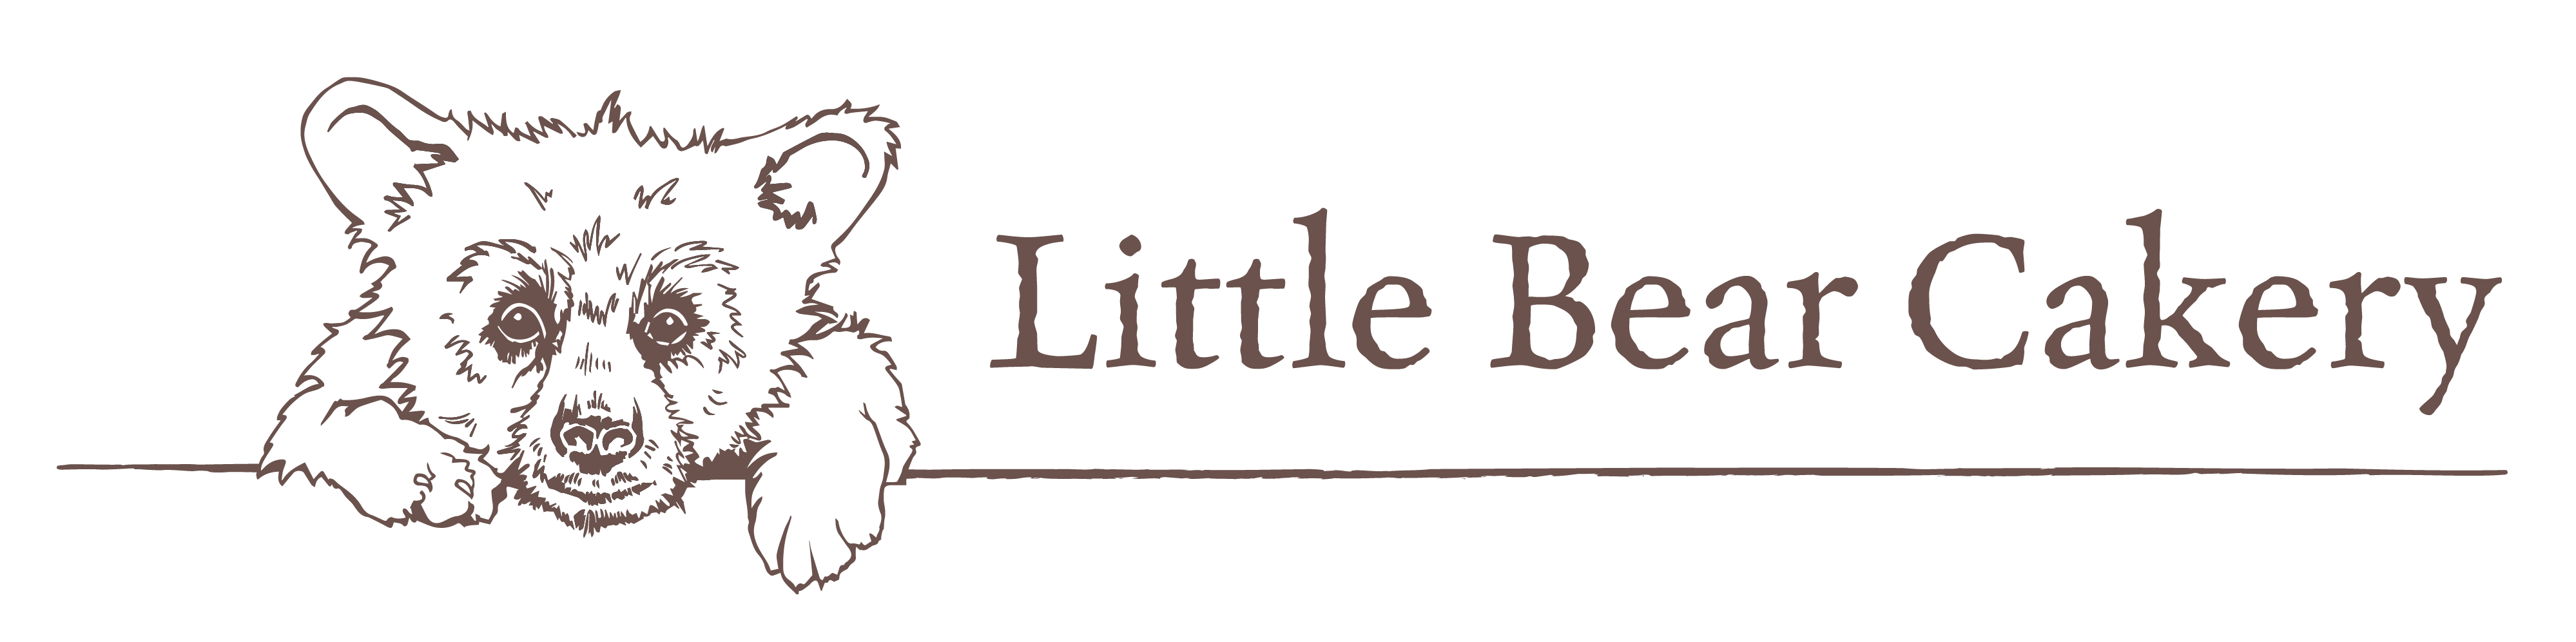 Little Bear Cakery logo